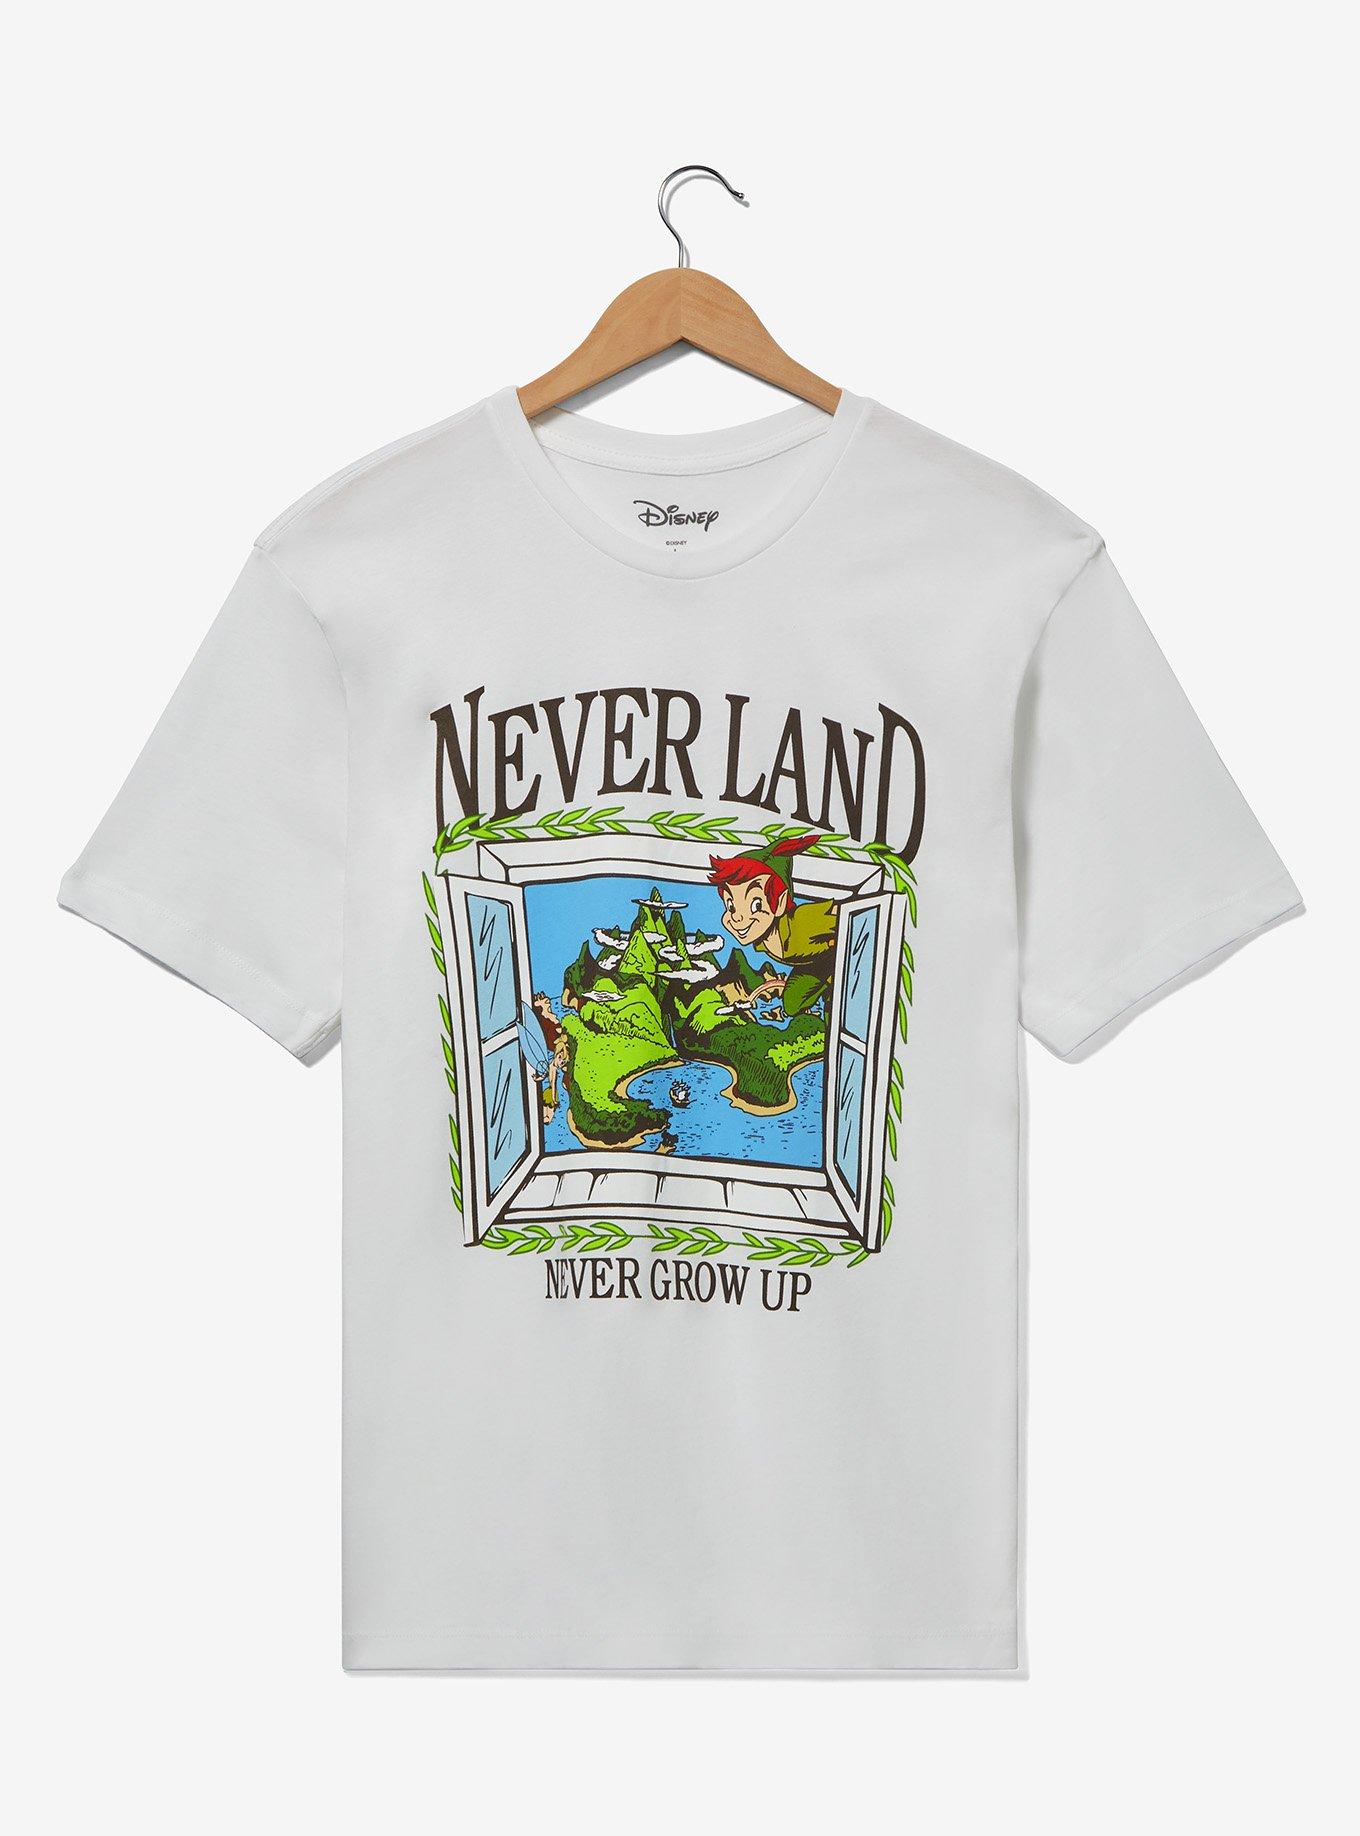 Pan Window BoxLunch BoxLunch Neverland | T-Shirt Disney Exclusive - Peter